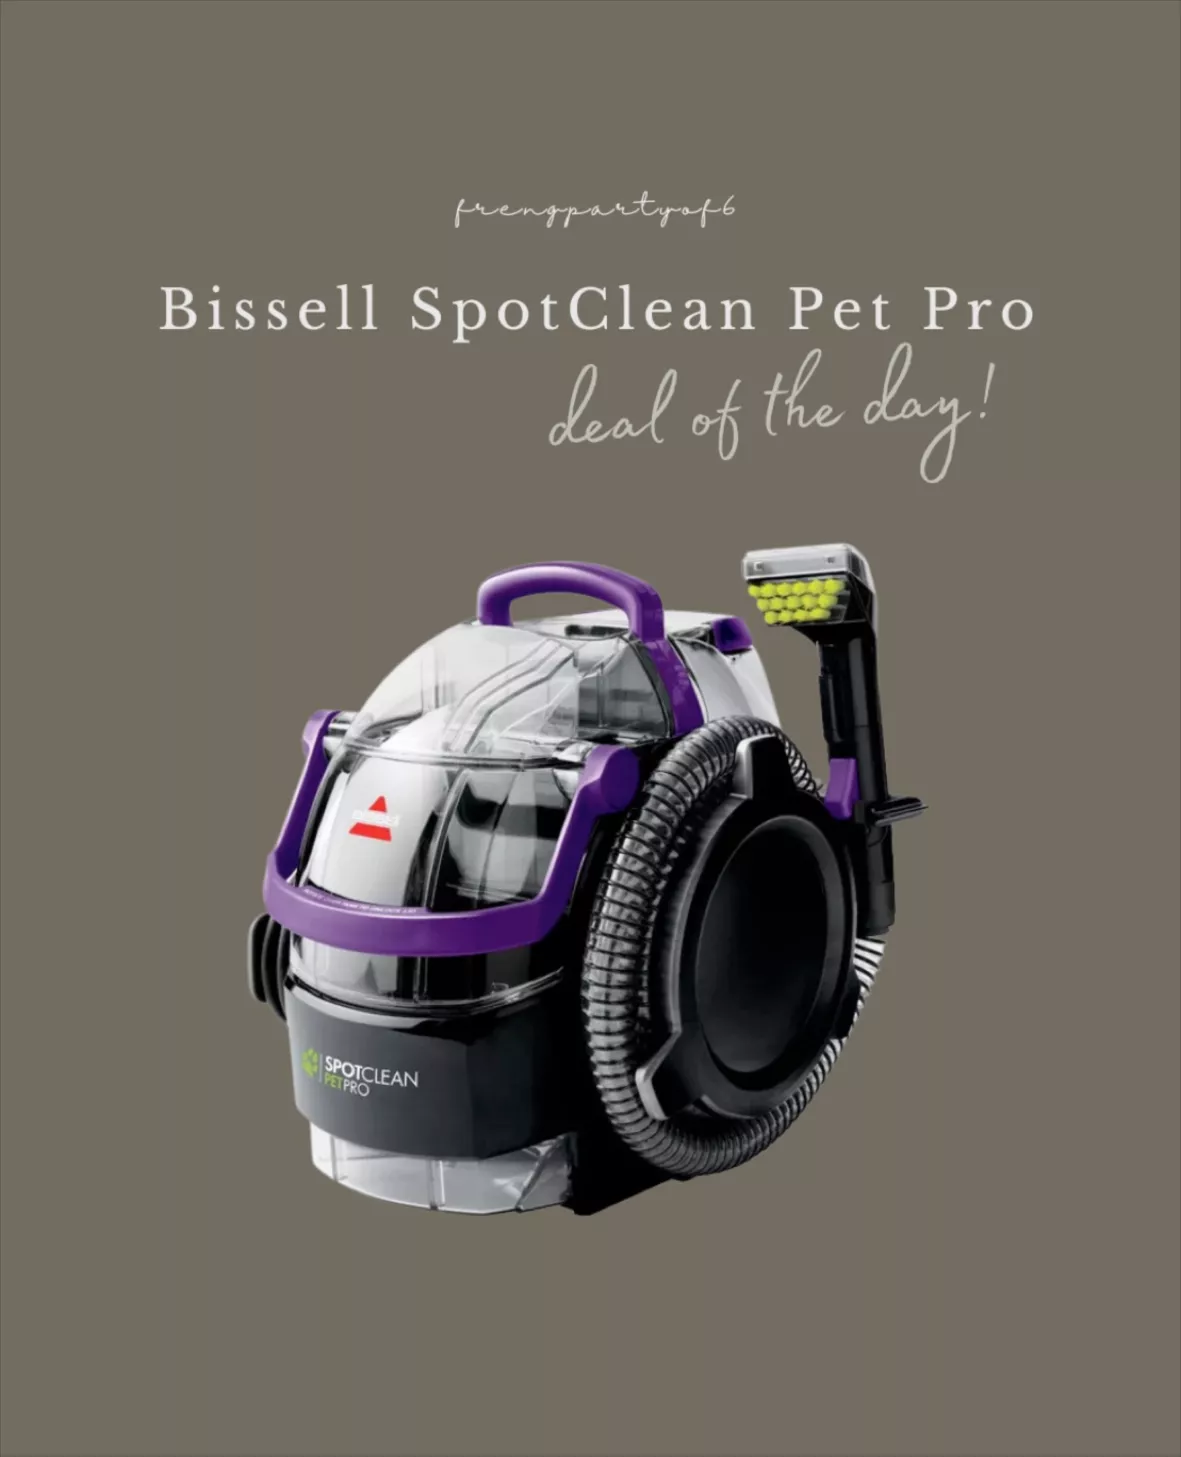 BISSEL SpotClean Pet Pro: The carpet restorer